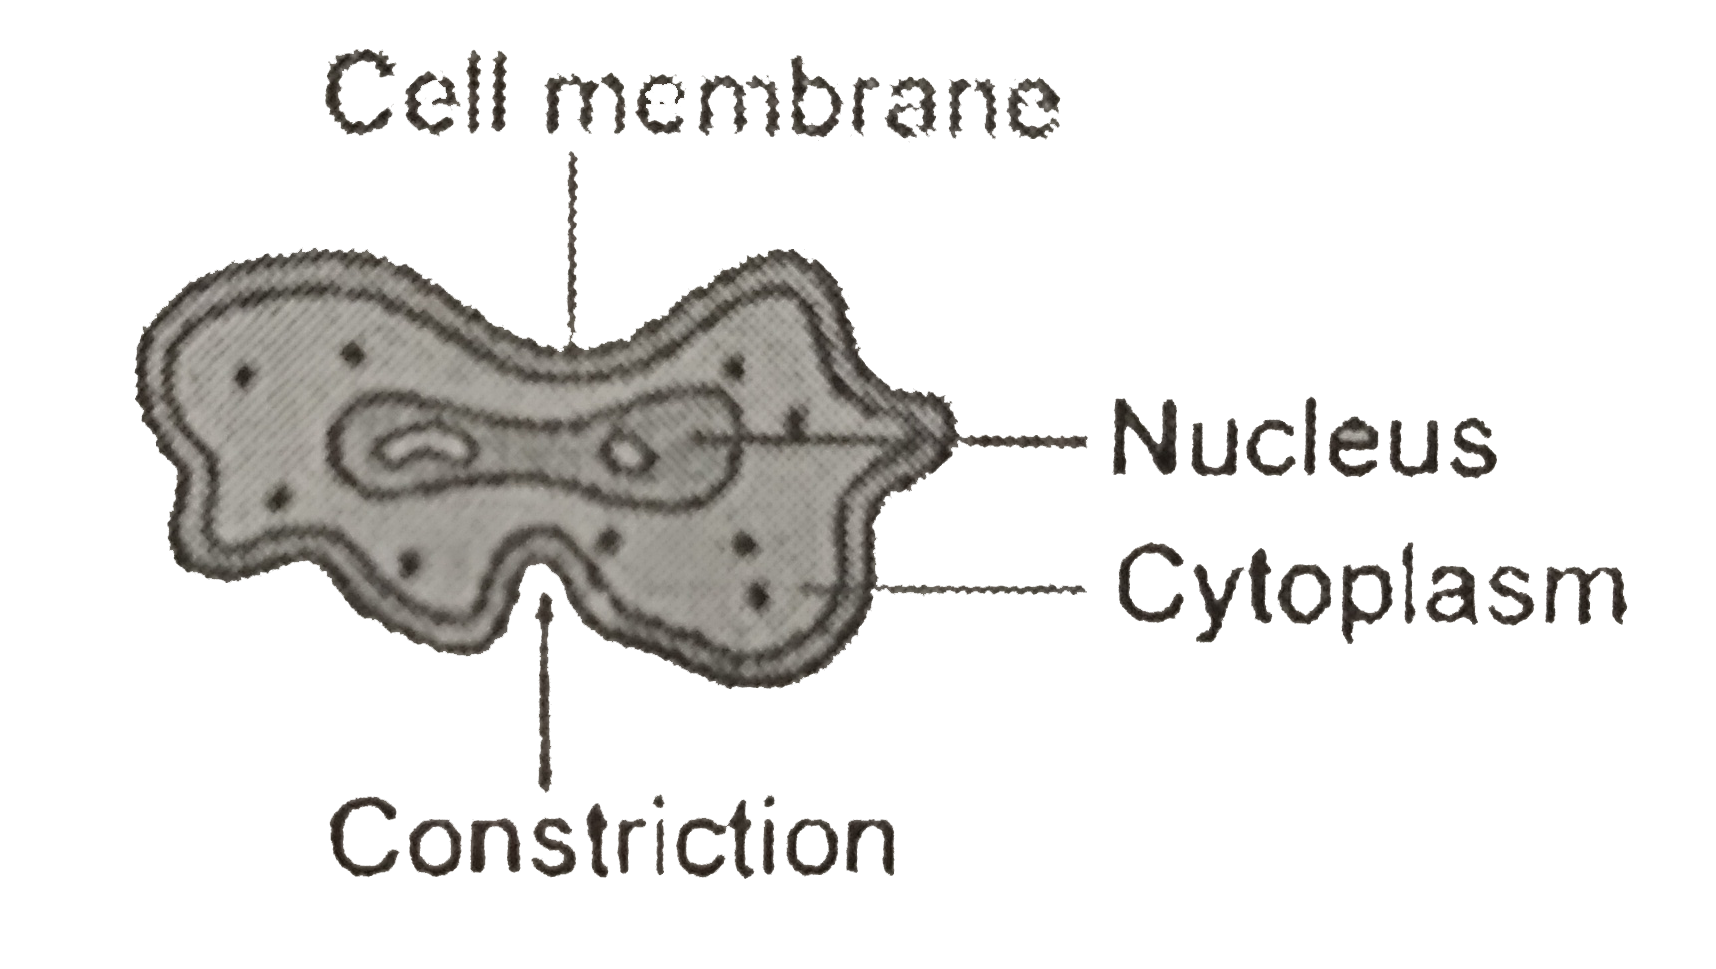 Abstract oval shape tiny protist amoeba organelle pellicle parasite  element. Line black hand drawn lab microbe icon sign symbol pictogram diagram  sketch Art doodle cartoon style design. Closeup view:: موقع تصميمي